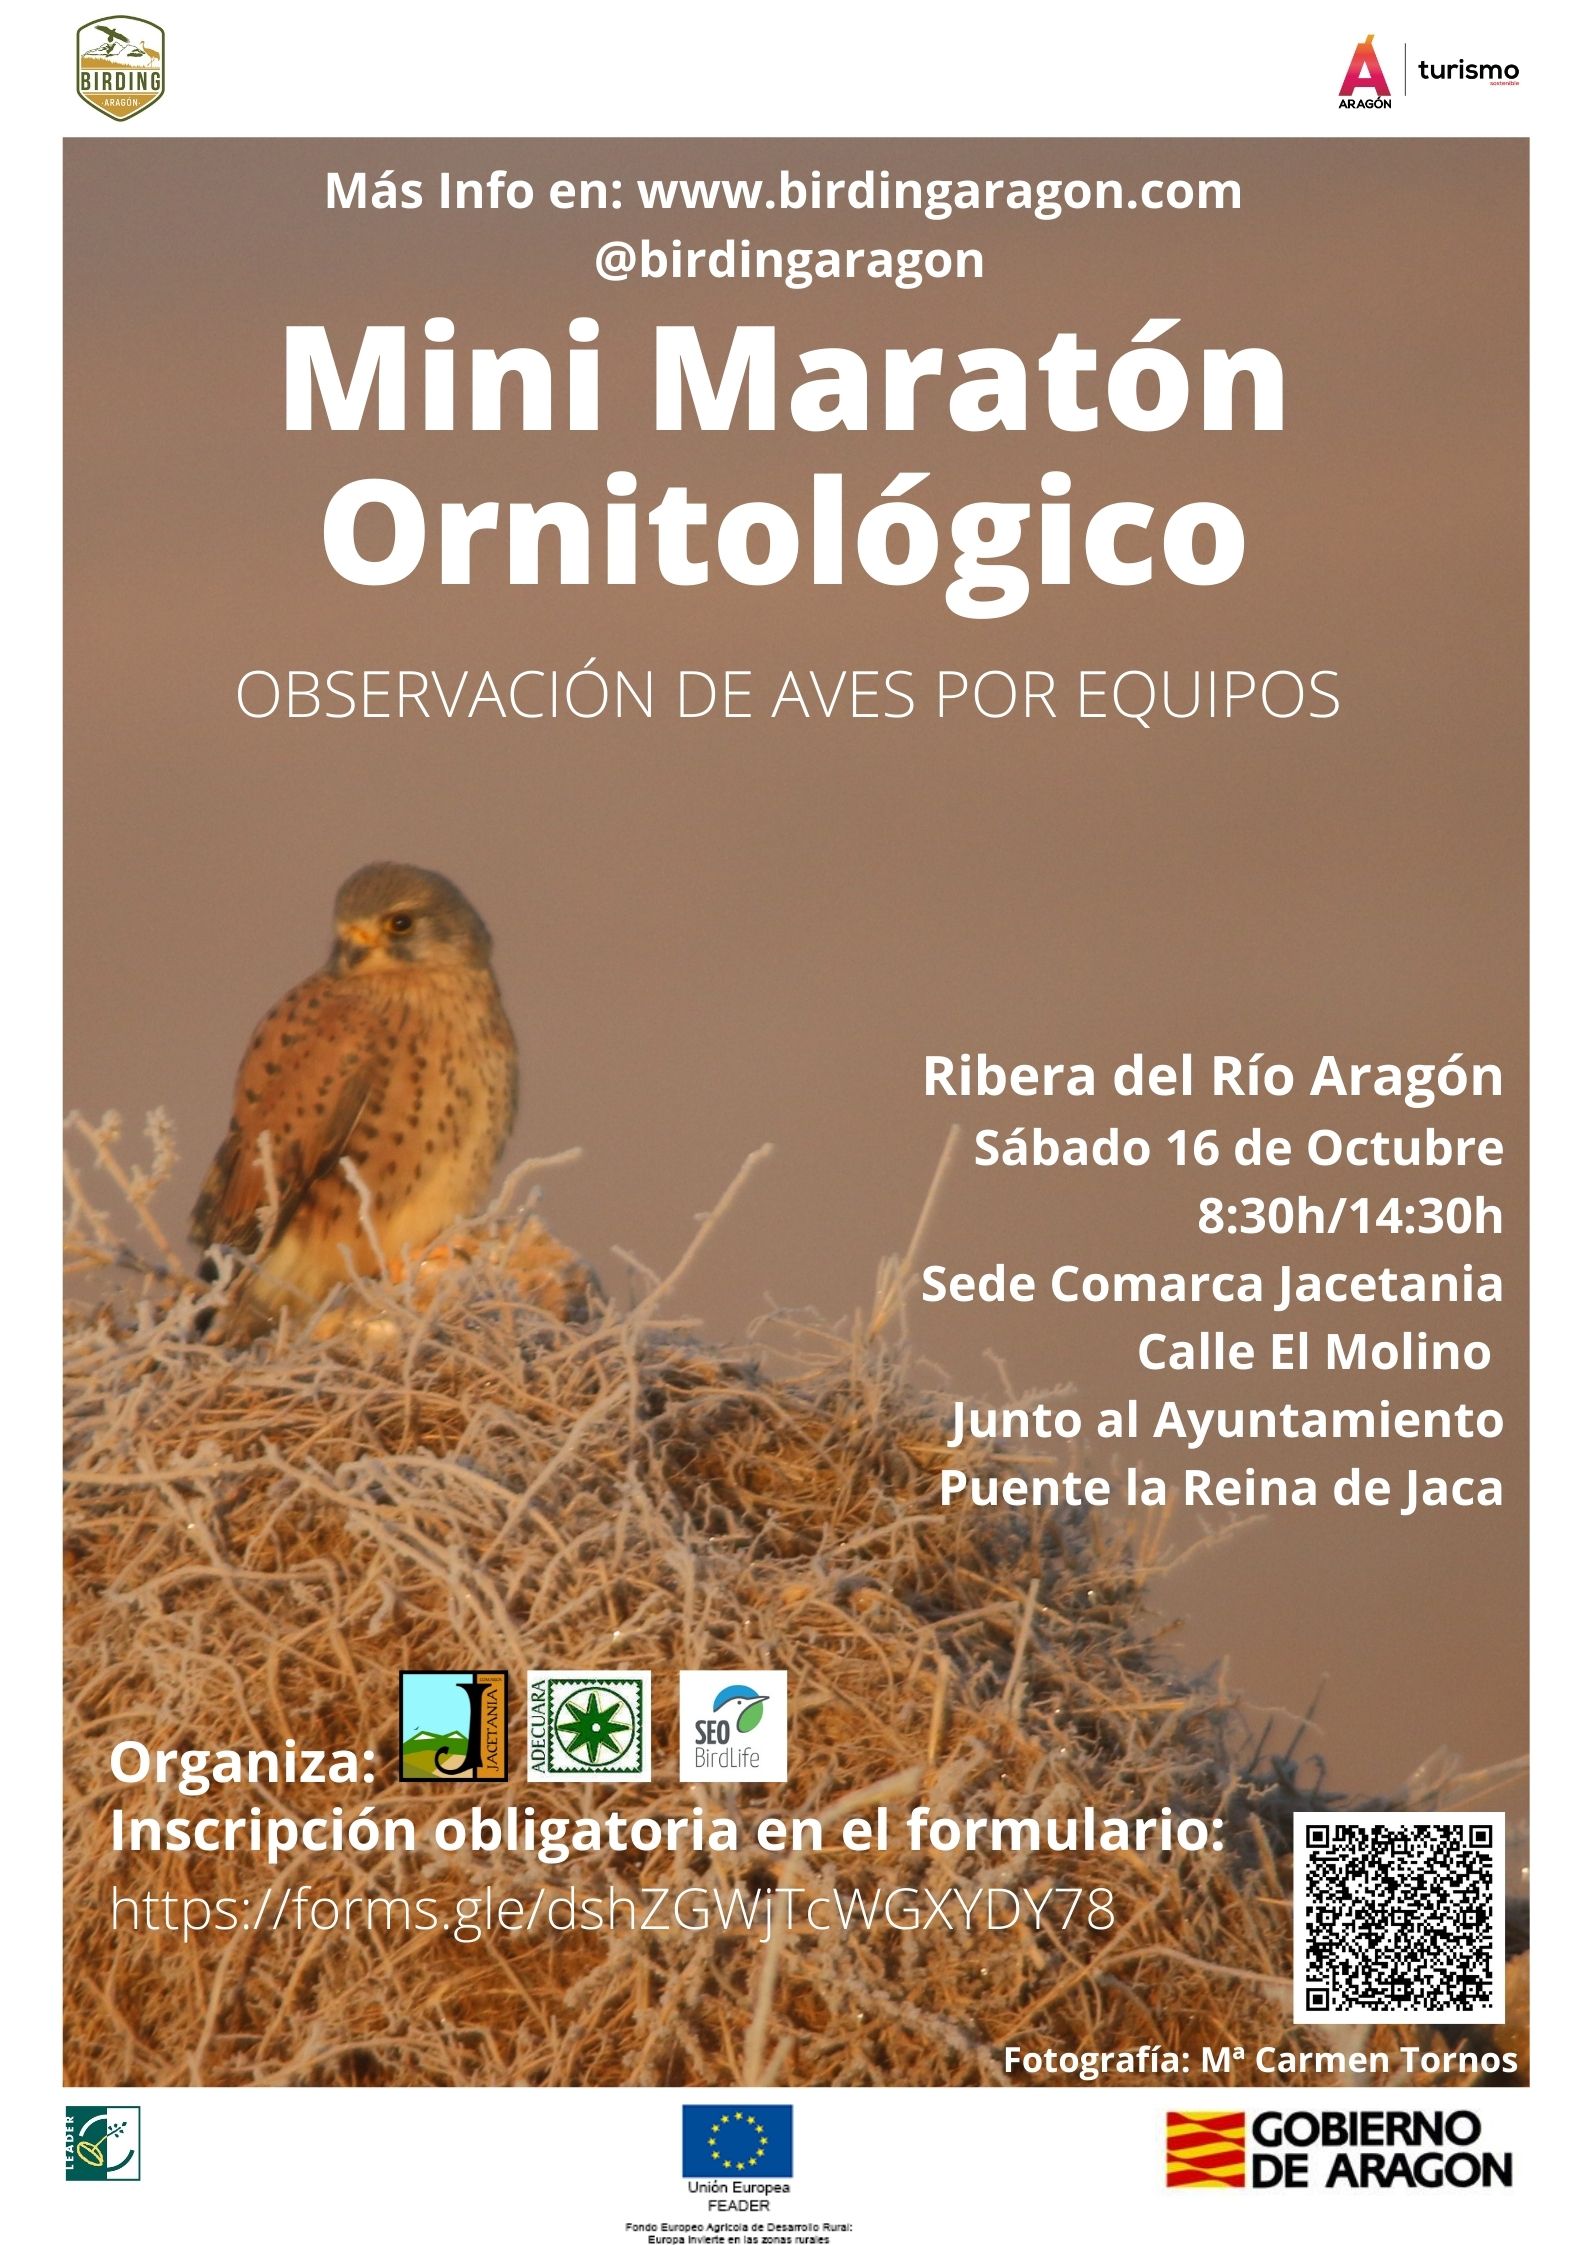 Mini-Maratón ornitológico, en Puente la Reina